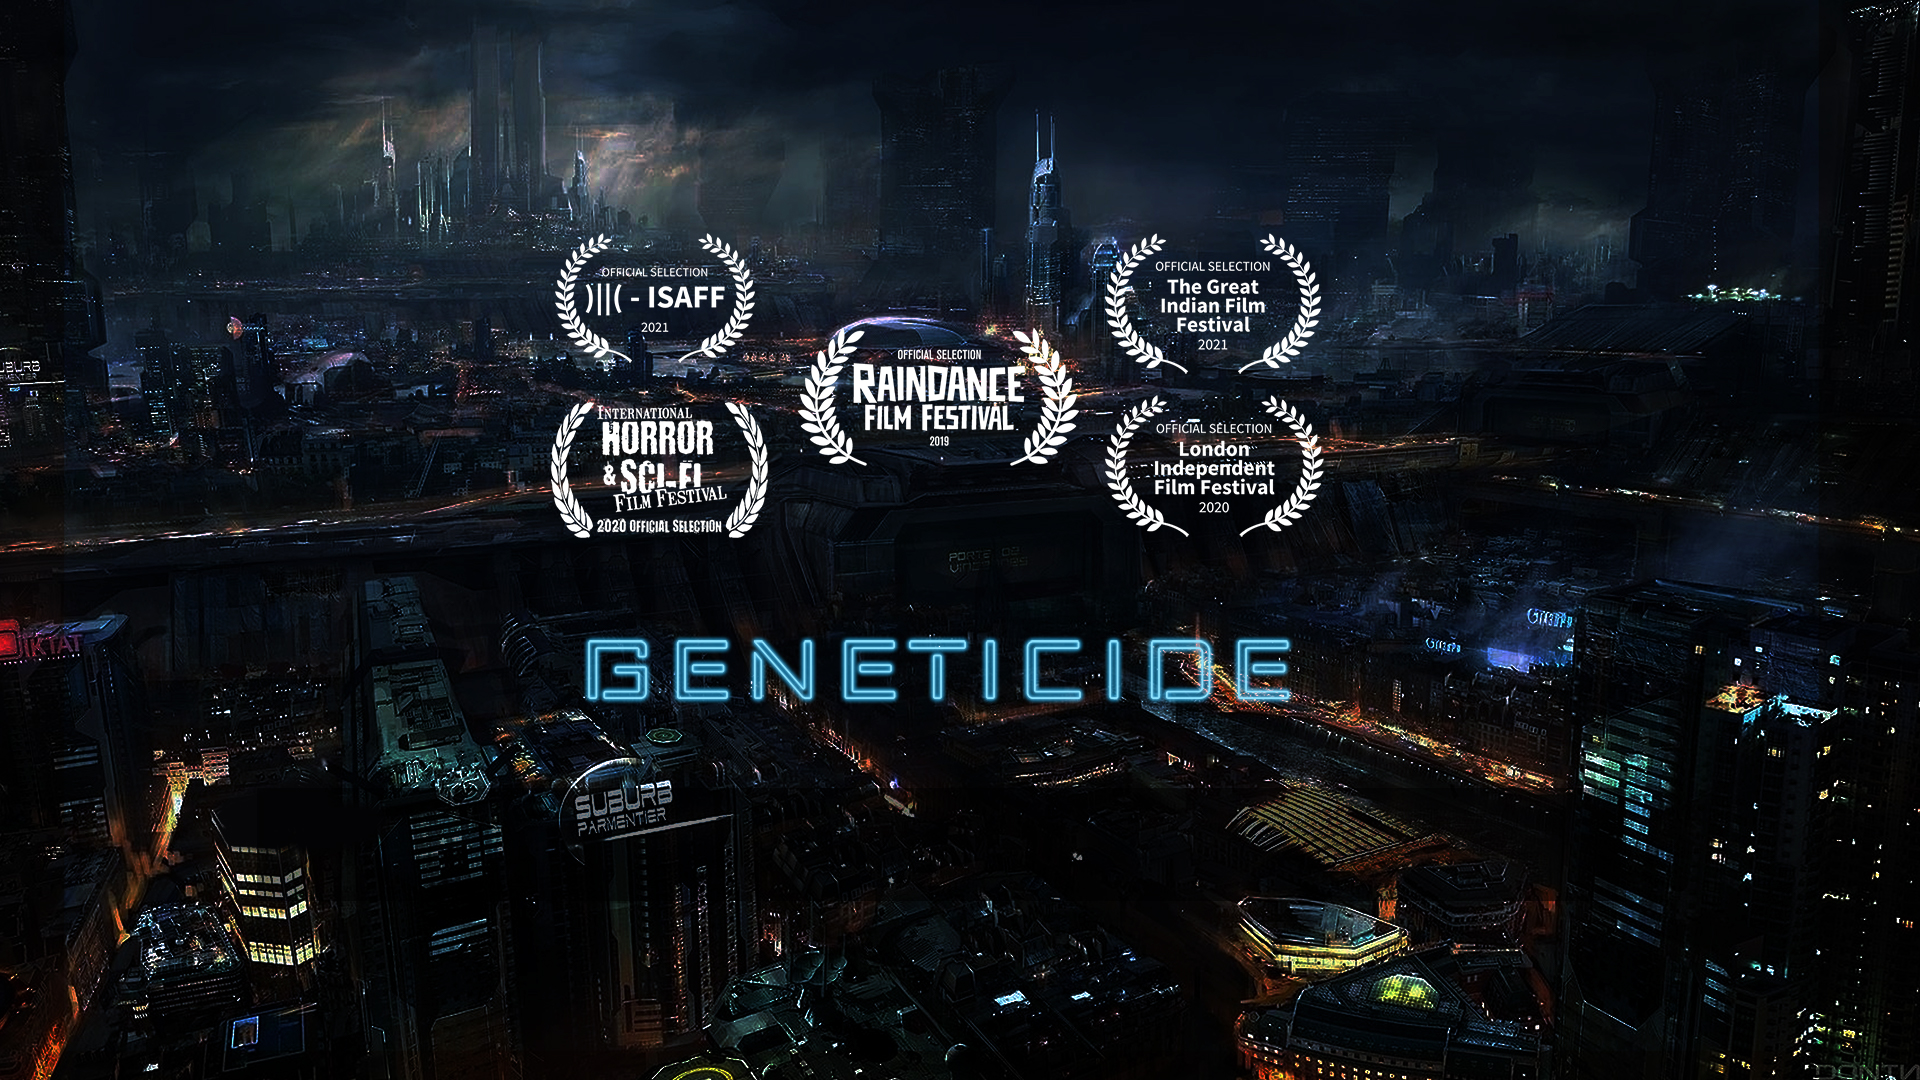 Geneticide